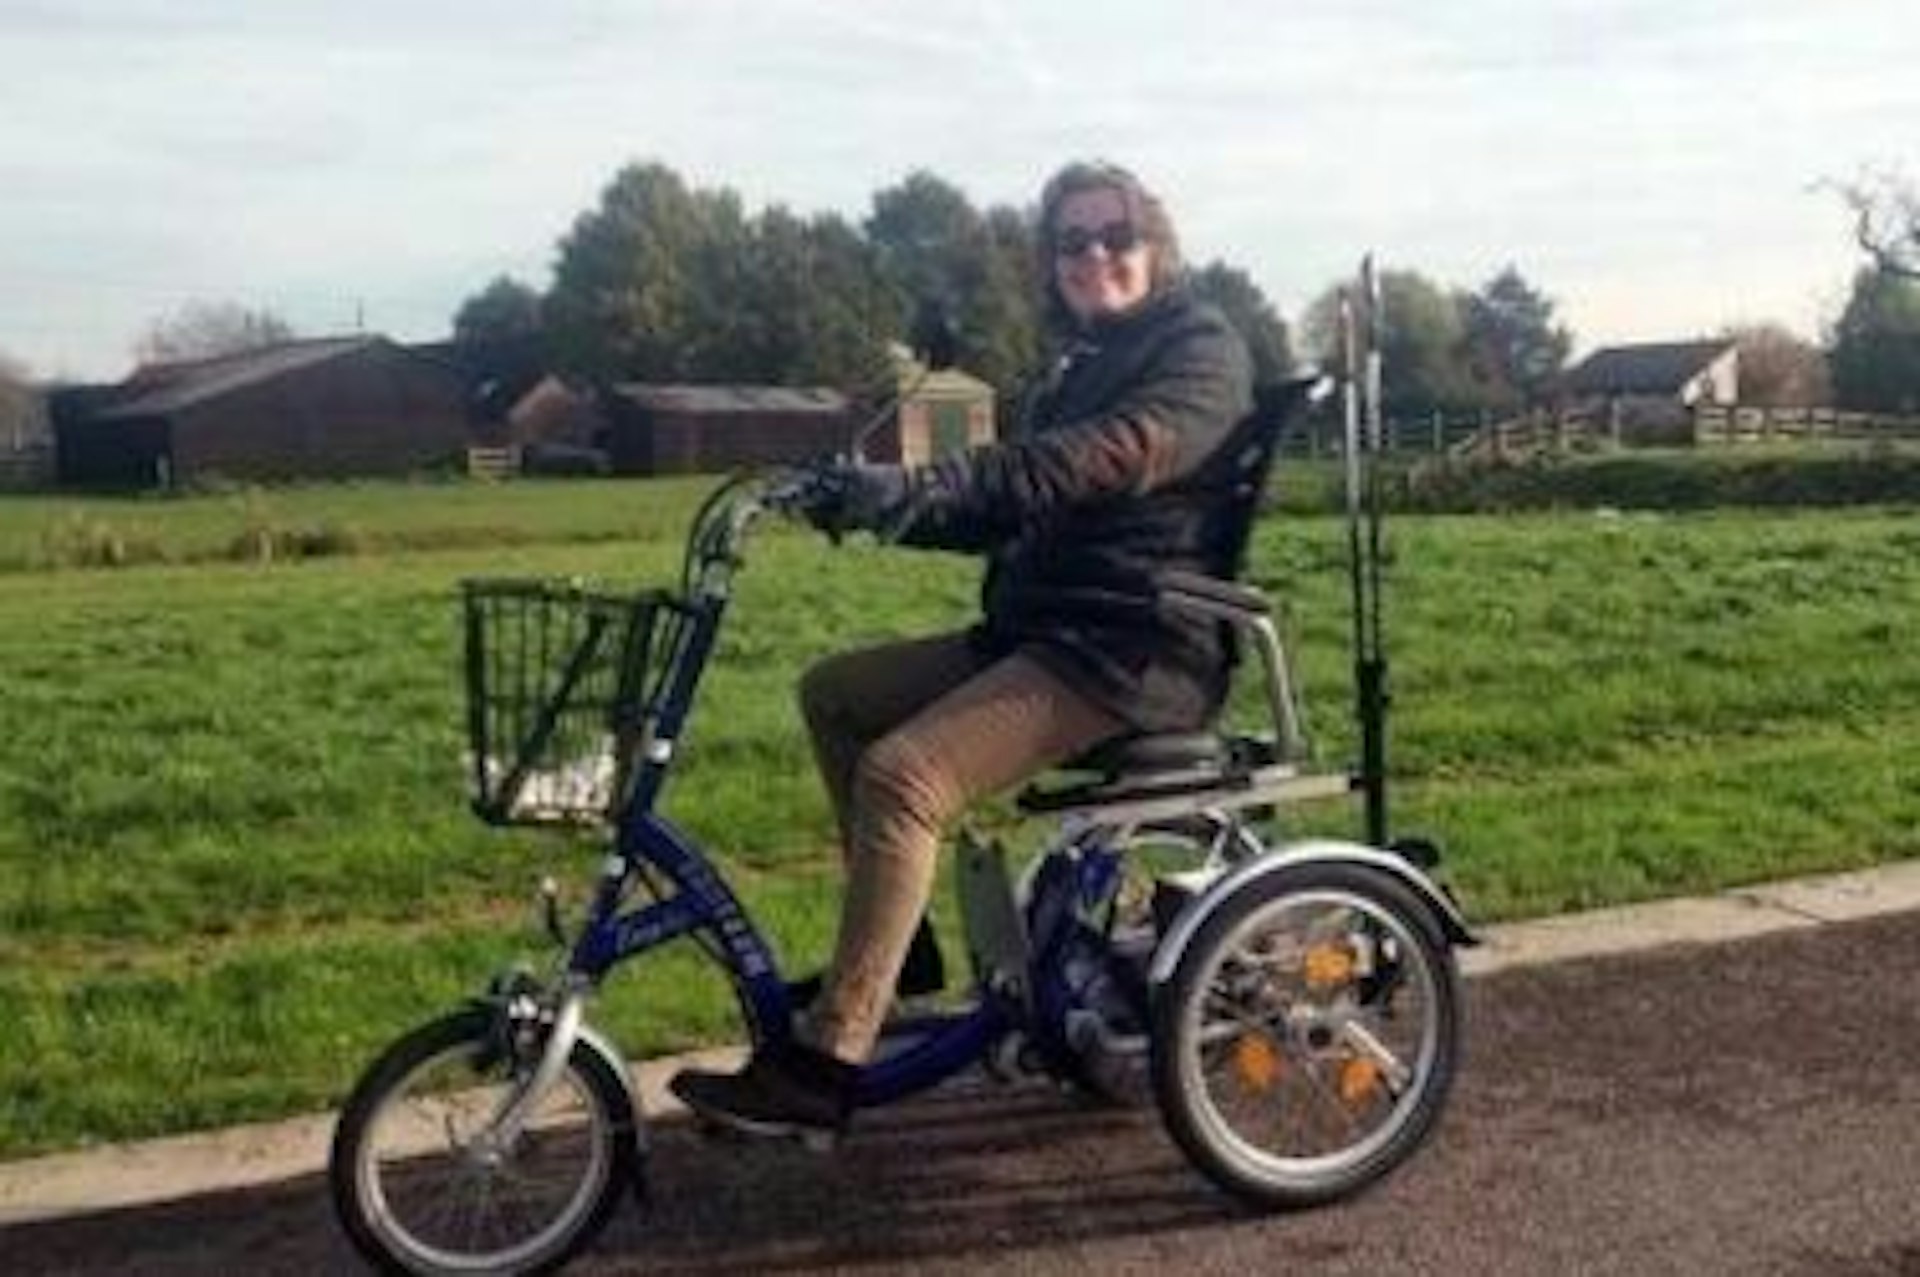 Expérience utilisateurs vélo-scooter Easy Go - Astrid van der Plank